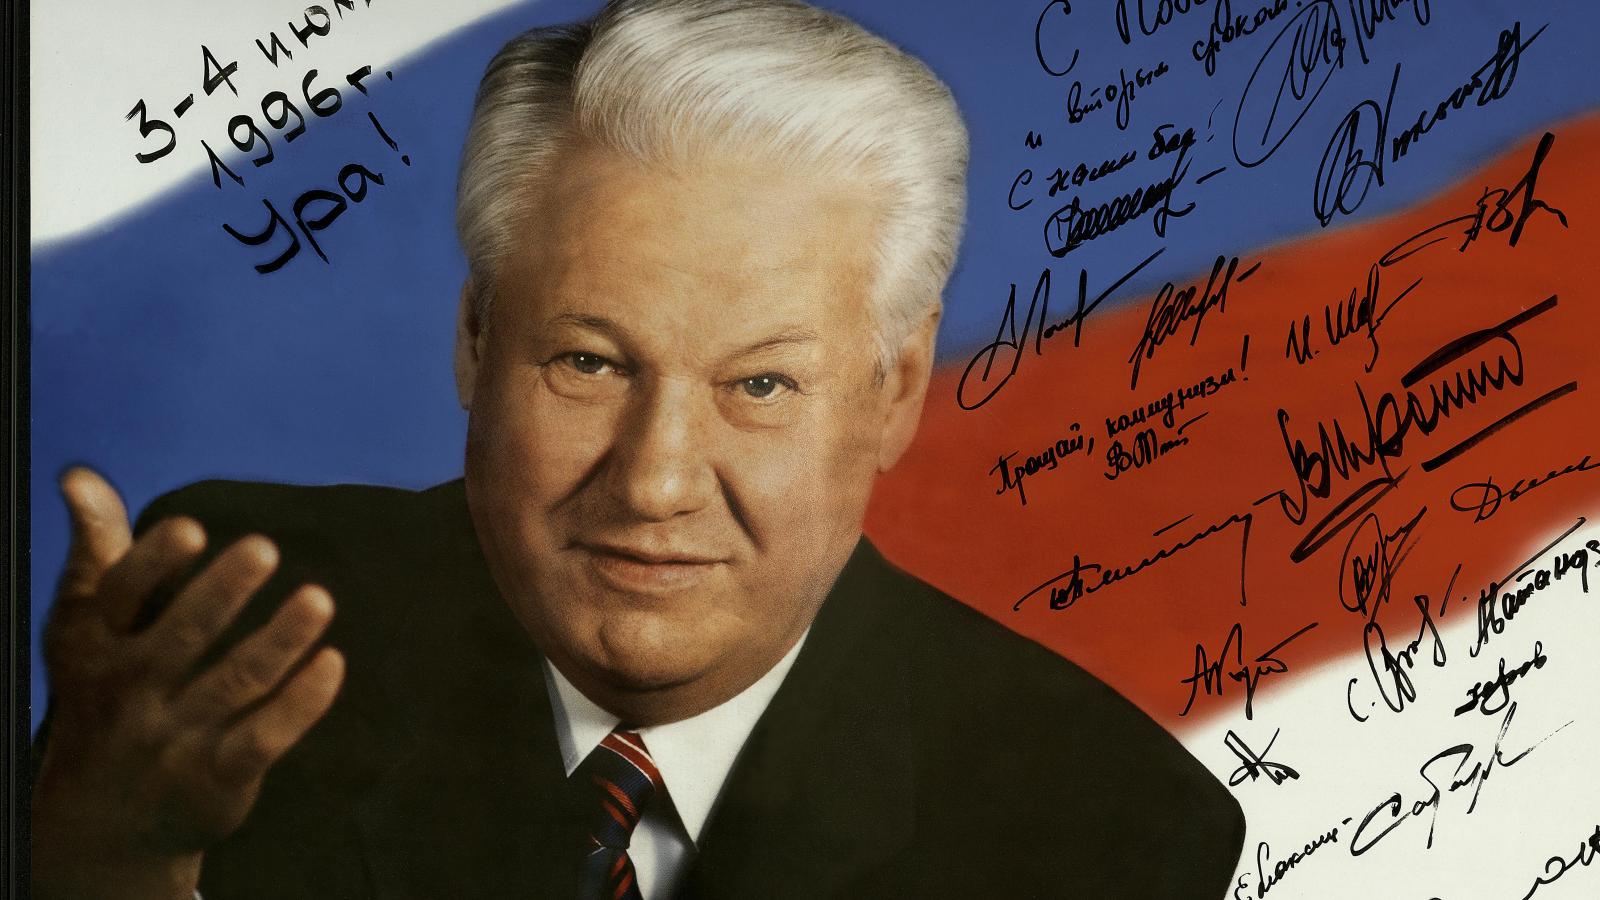 От 1 июля 1996 г. Плакат Ельцин 1996. Кампания Ельцина 1996.